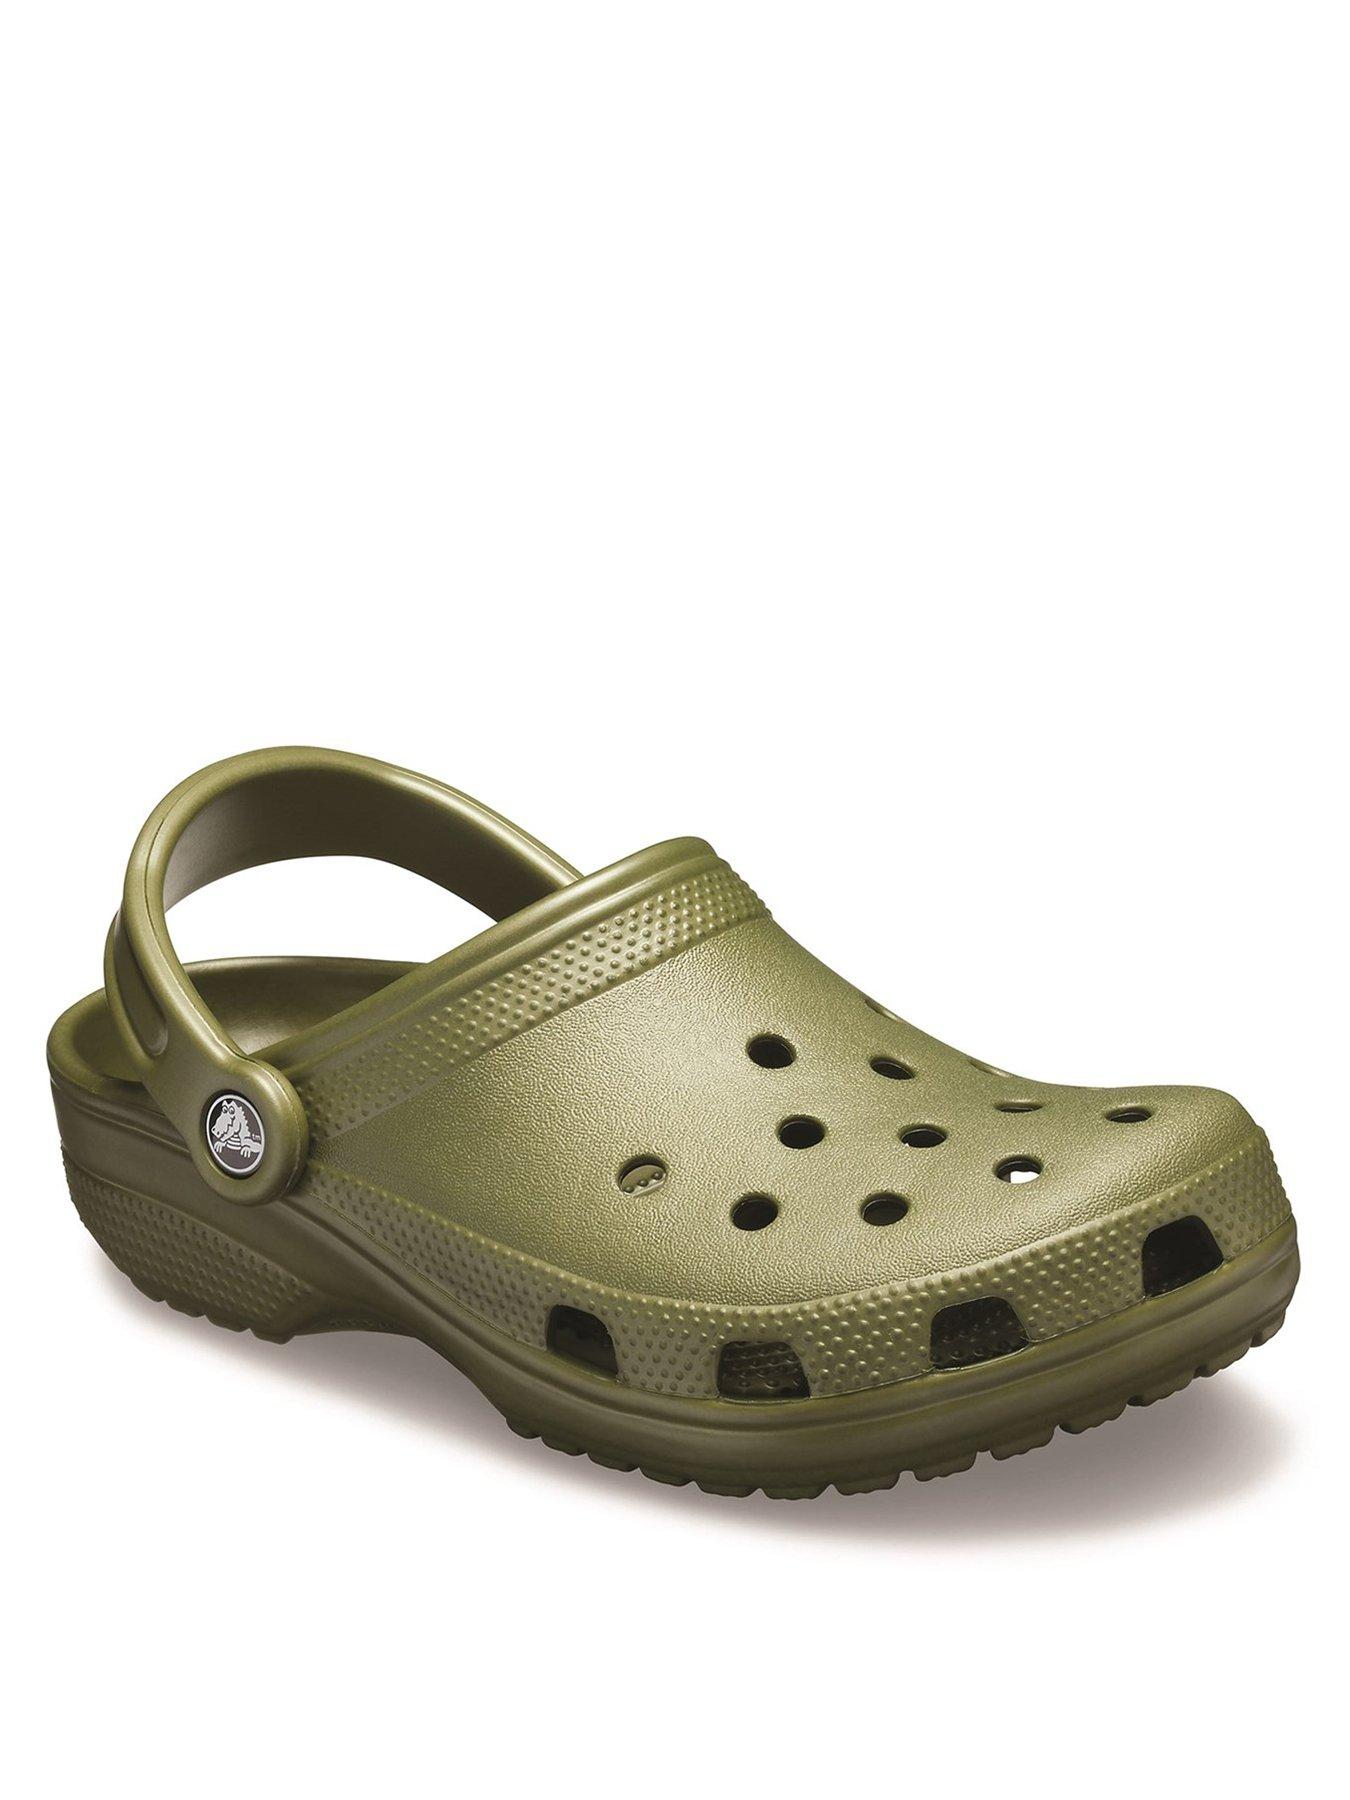 Crocs Classic Clogs - Khaki 